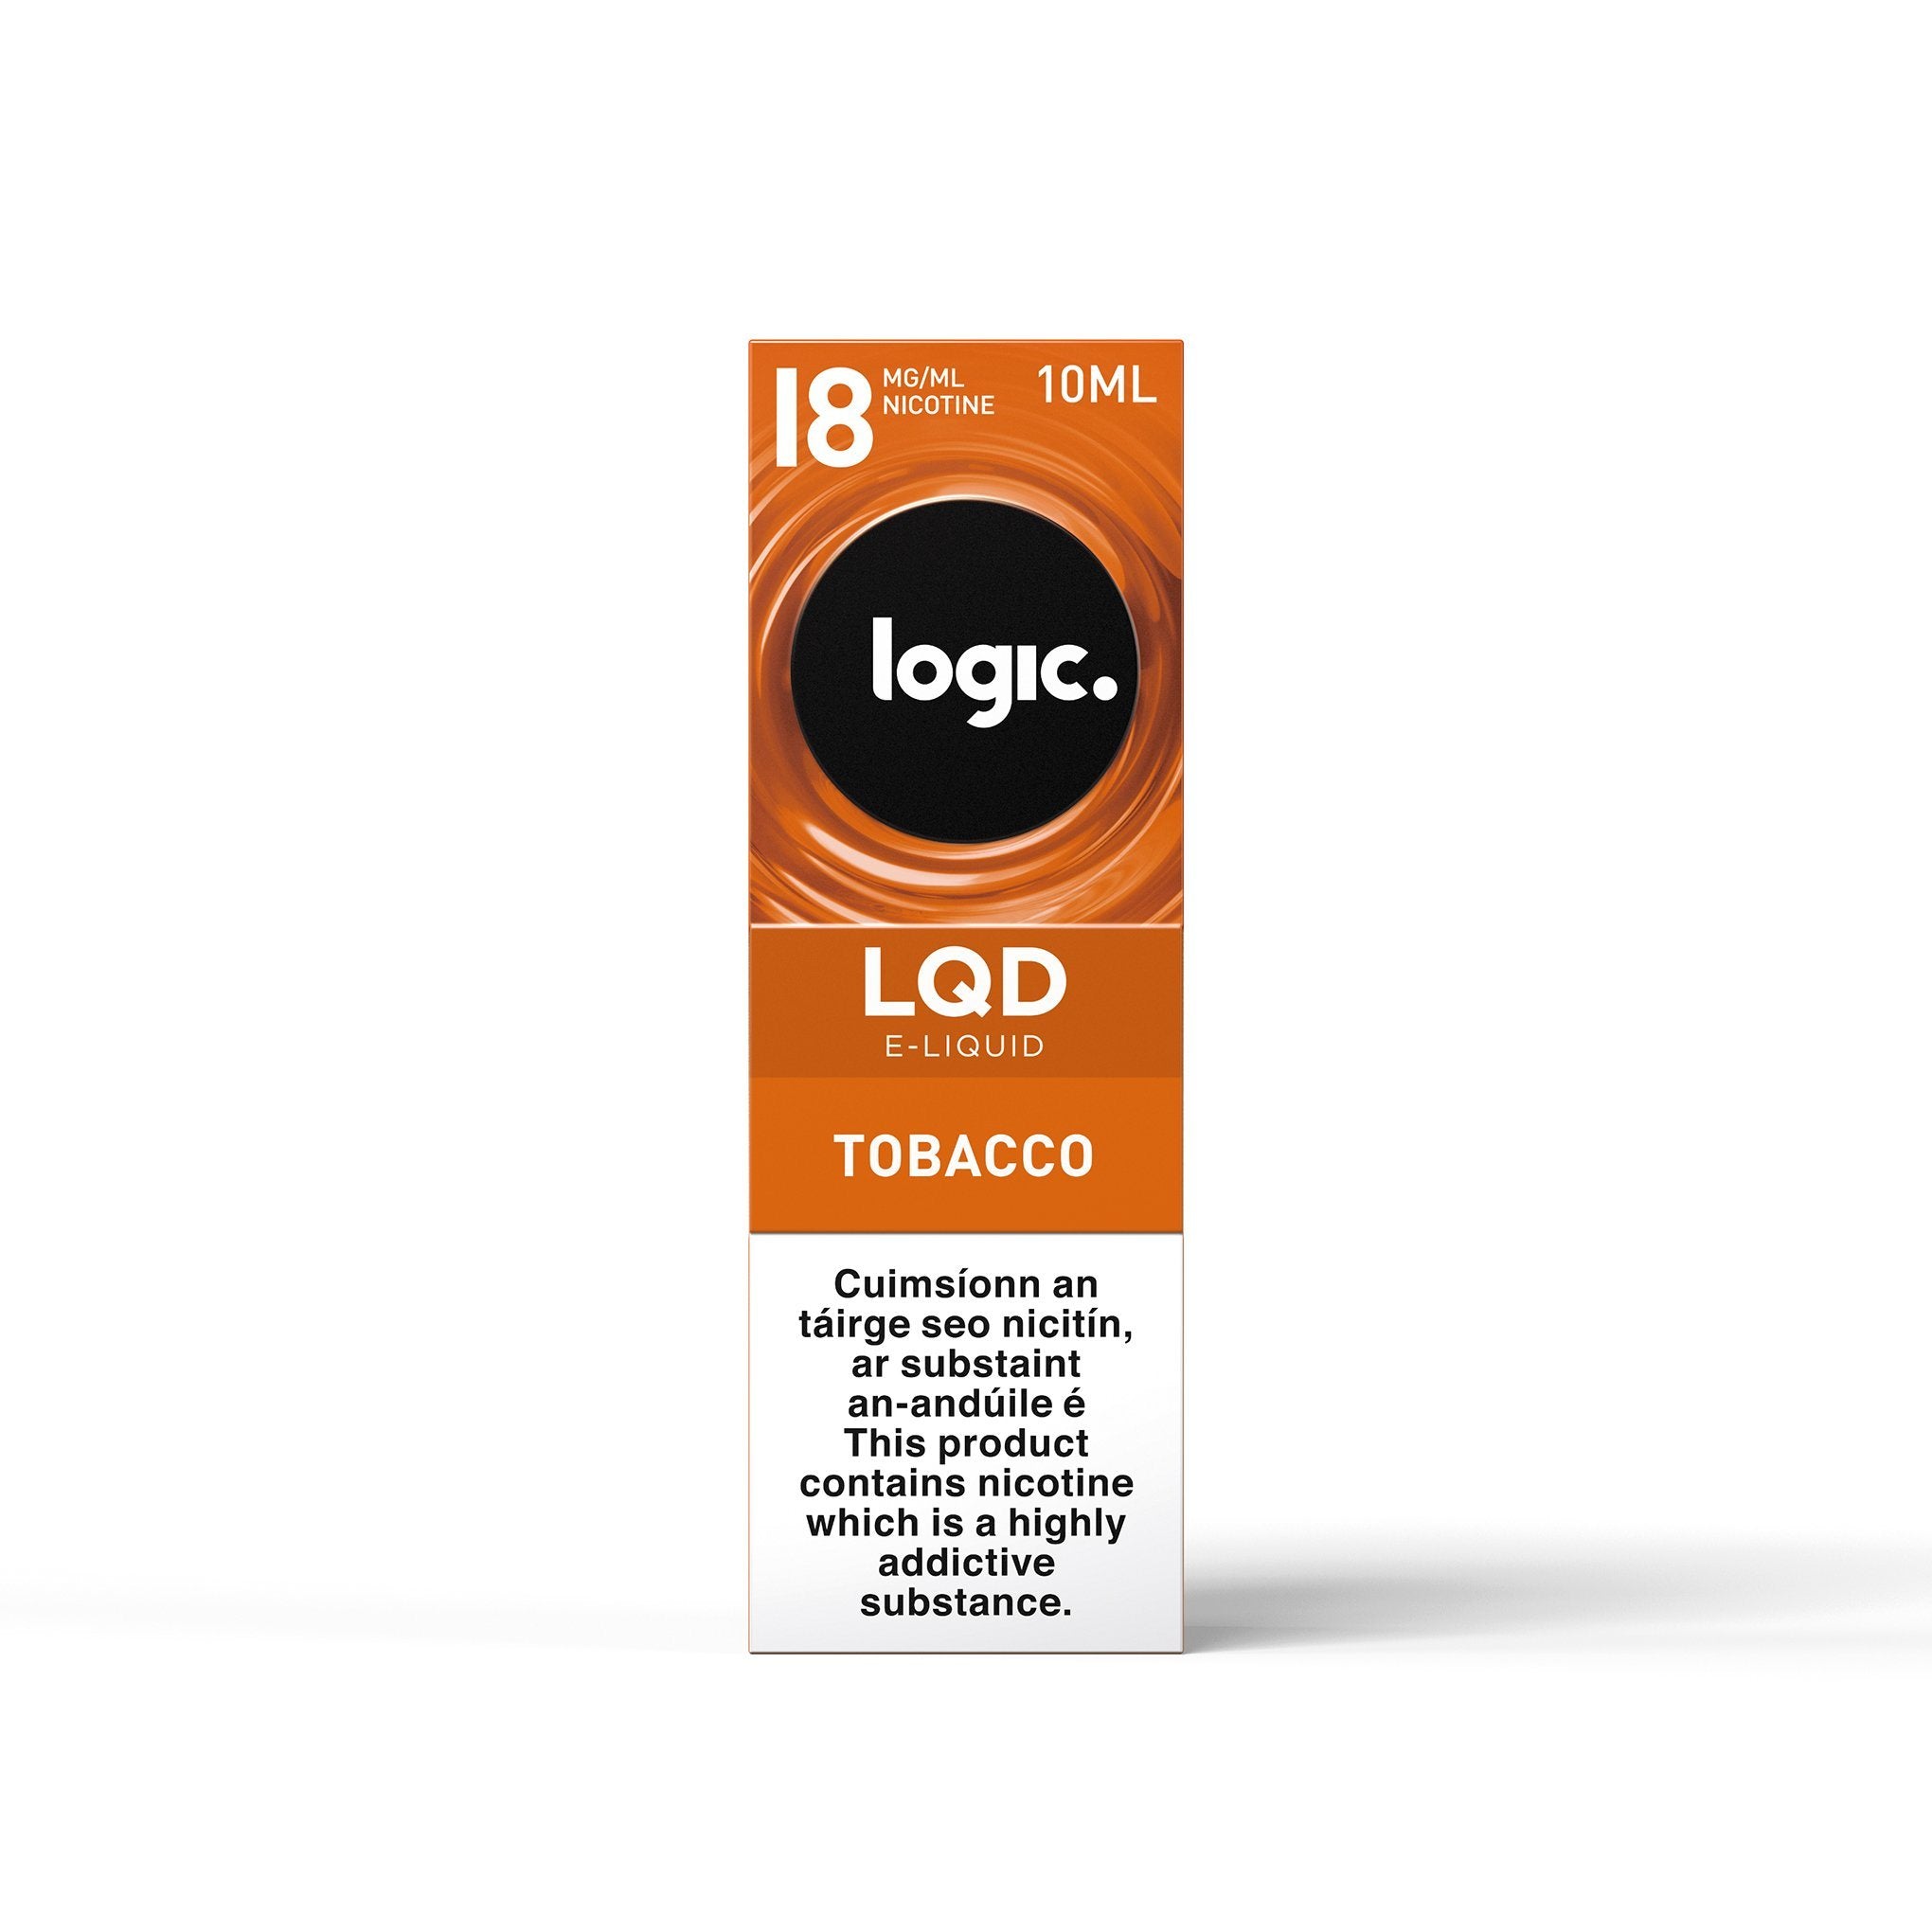 Logic LQD E-Liquid Tobacco 18MG - High Nicotine